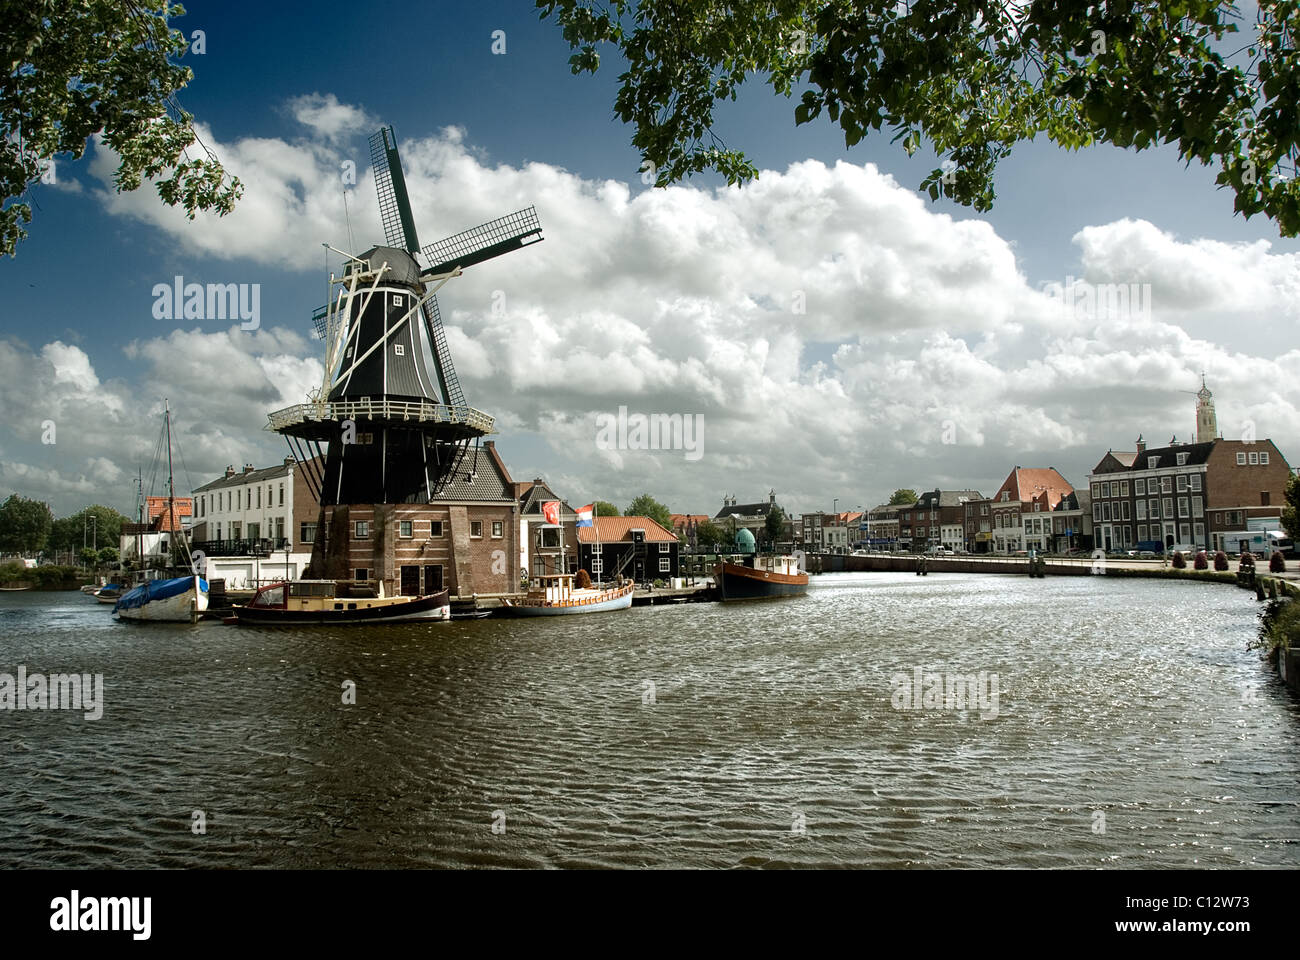 Canal de Haarlem et de Adriaan moulin, Hollande Banque D'Images